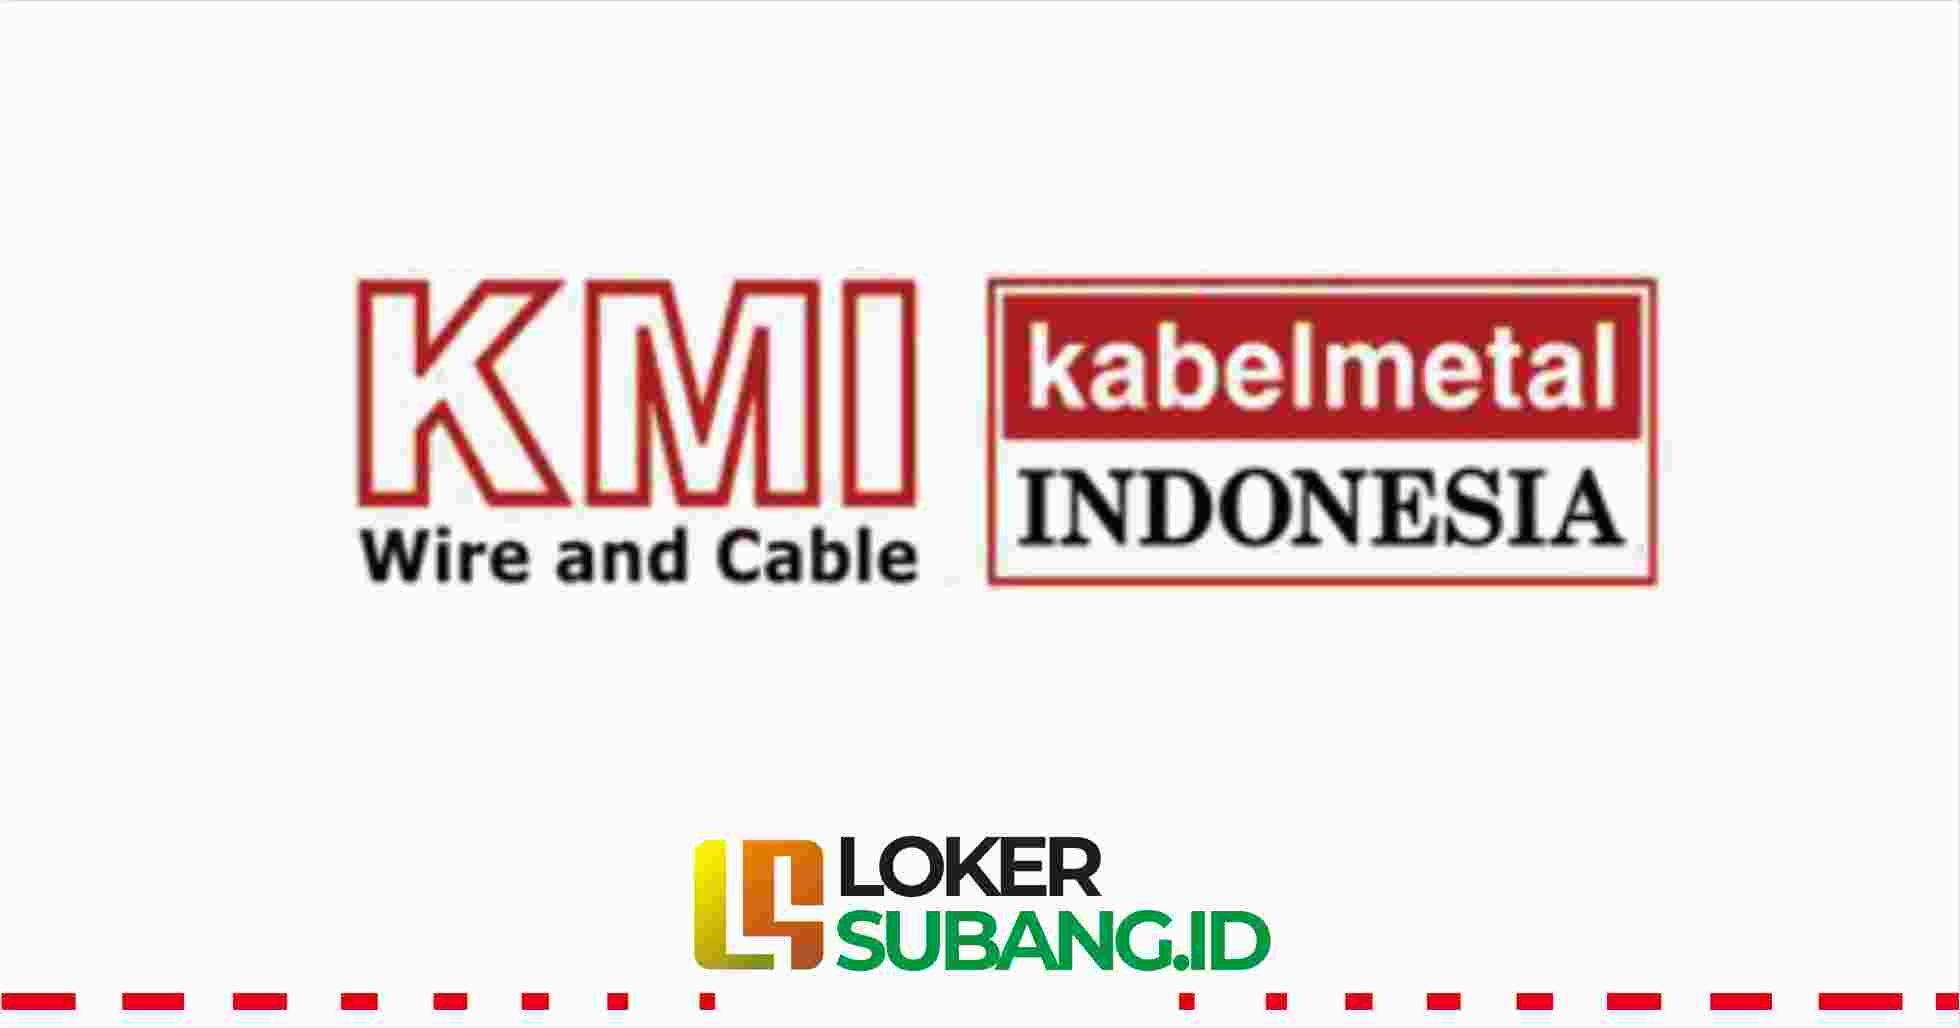 PT KMI Wire & Cable